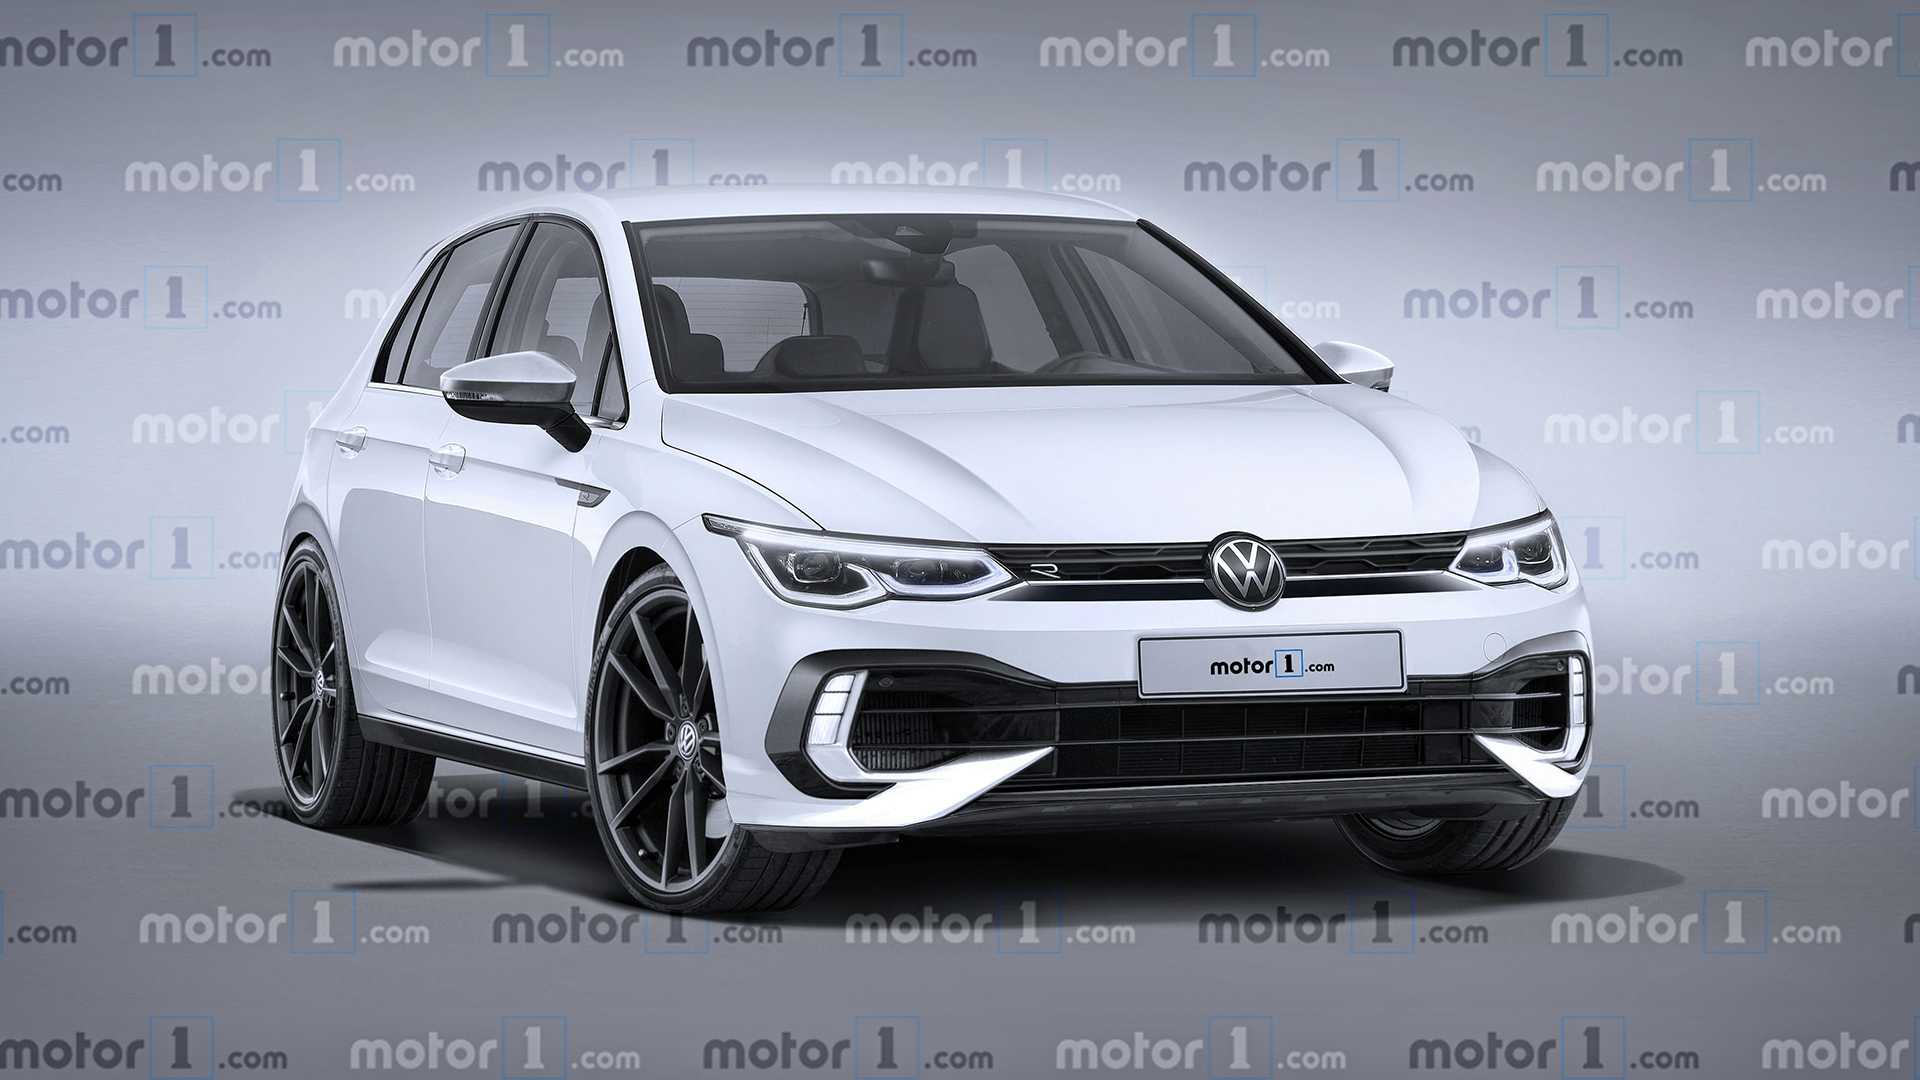 2021 Volkswagen Golf R Rendering Looks Rather Enticing